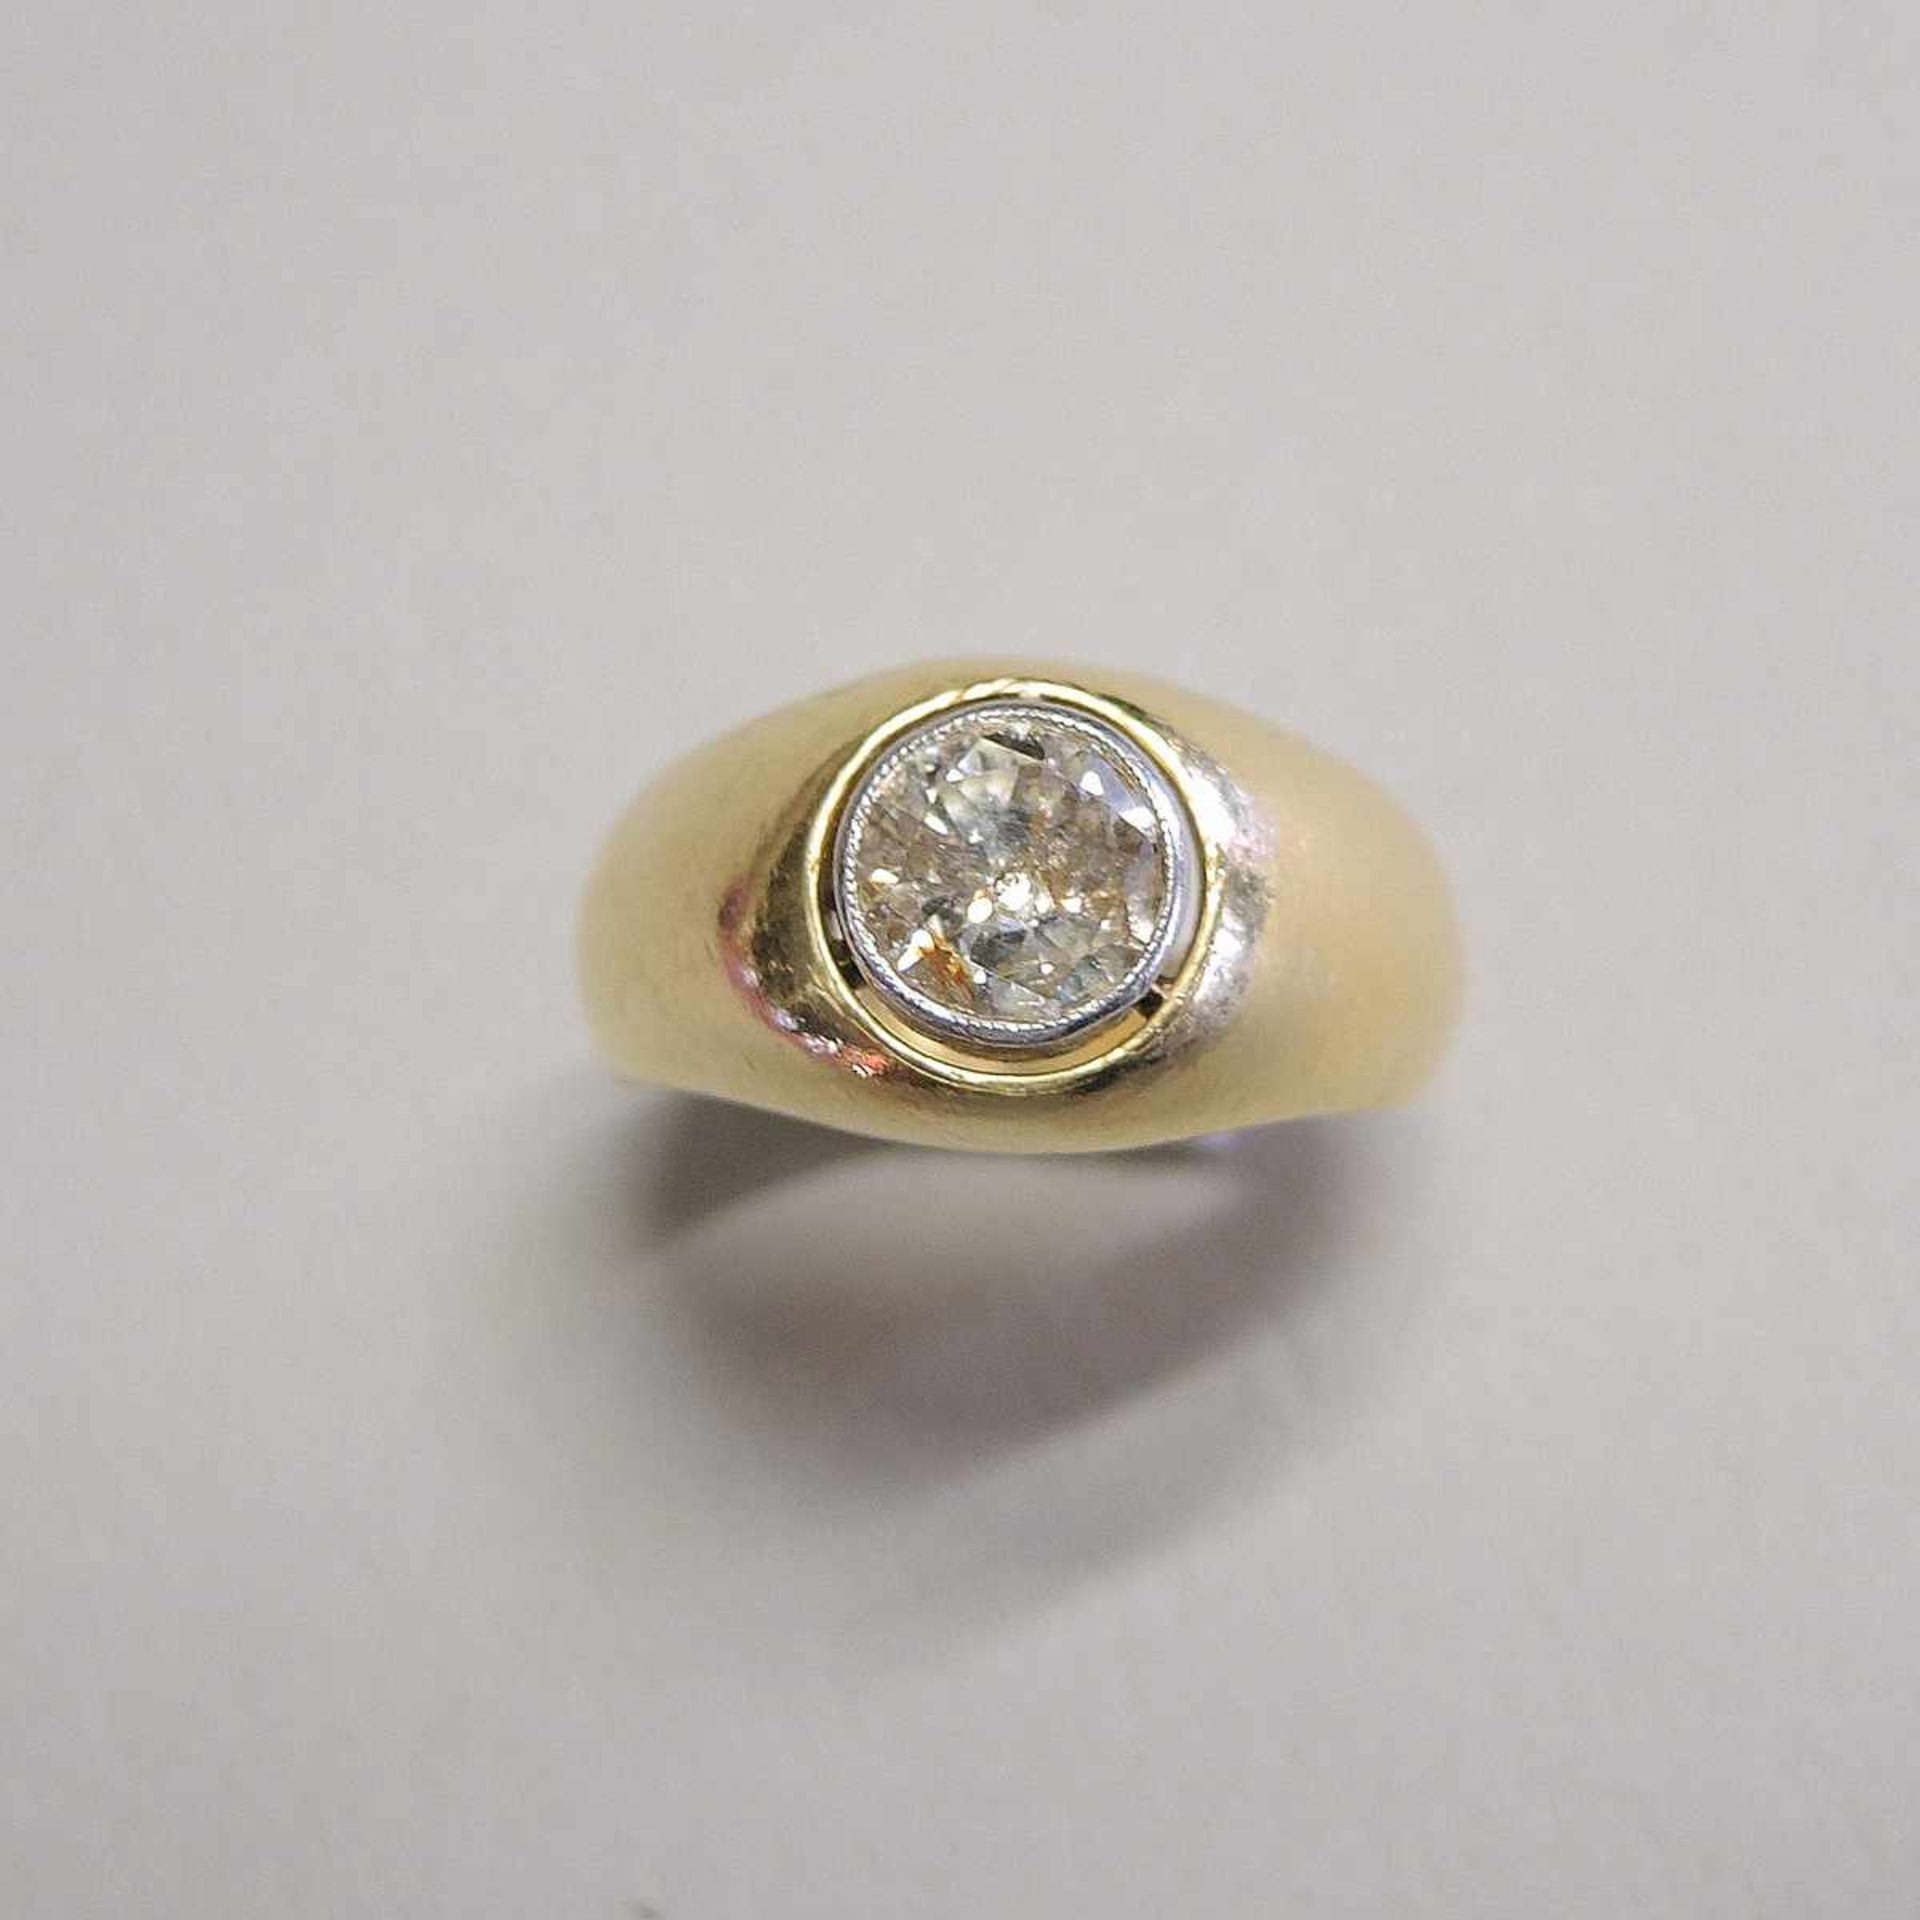 Diamant Solitär Ring 18kt. Gelbgold, Solitärdiamant von ca. 1,25 ct. Pikee 2 Farbe I. Massive